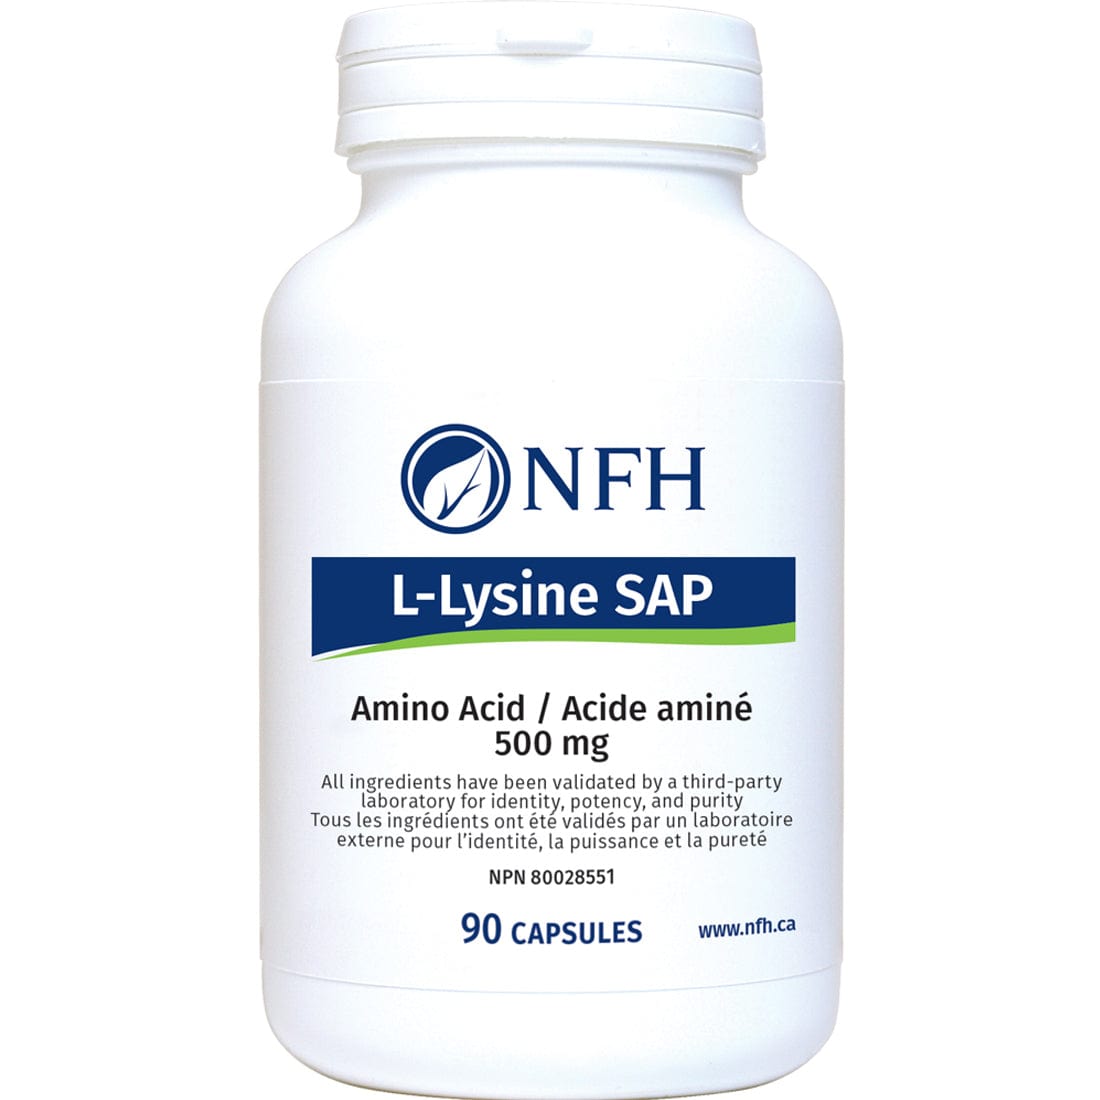 NFH L-Lysine SAP 500mg, 90 Capsules